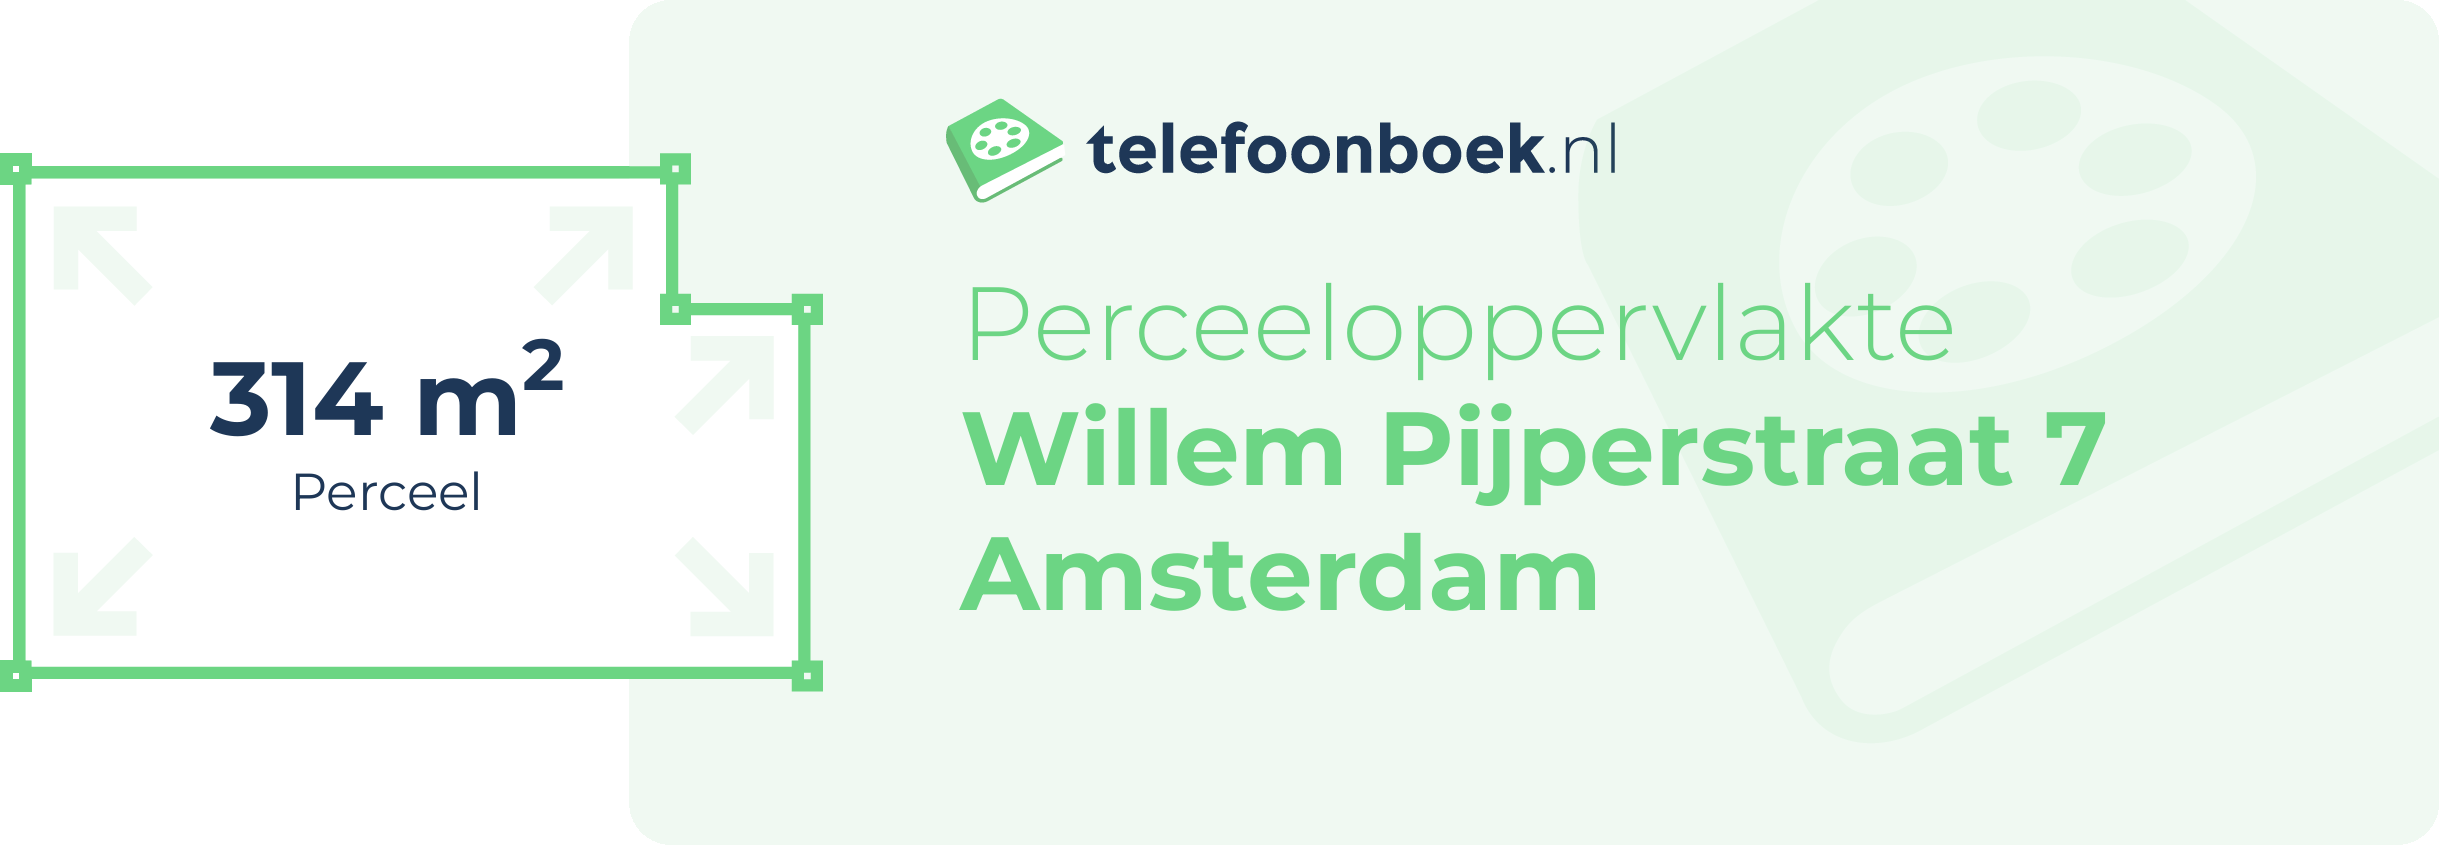 Perceeloppervlakte Willem Pijperstraat 7 Amsterdam